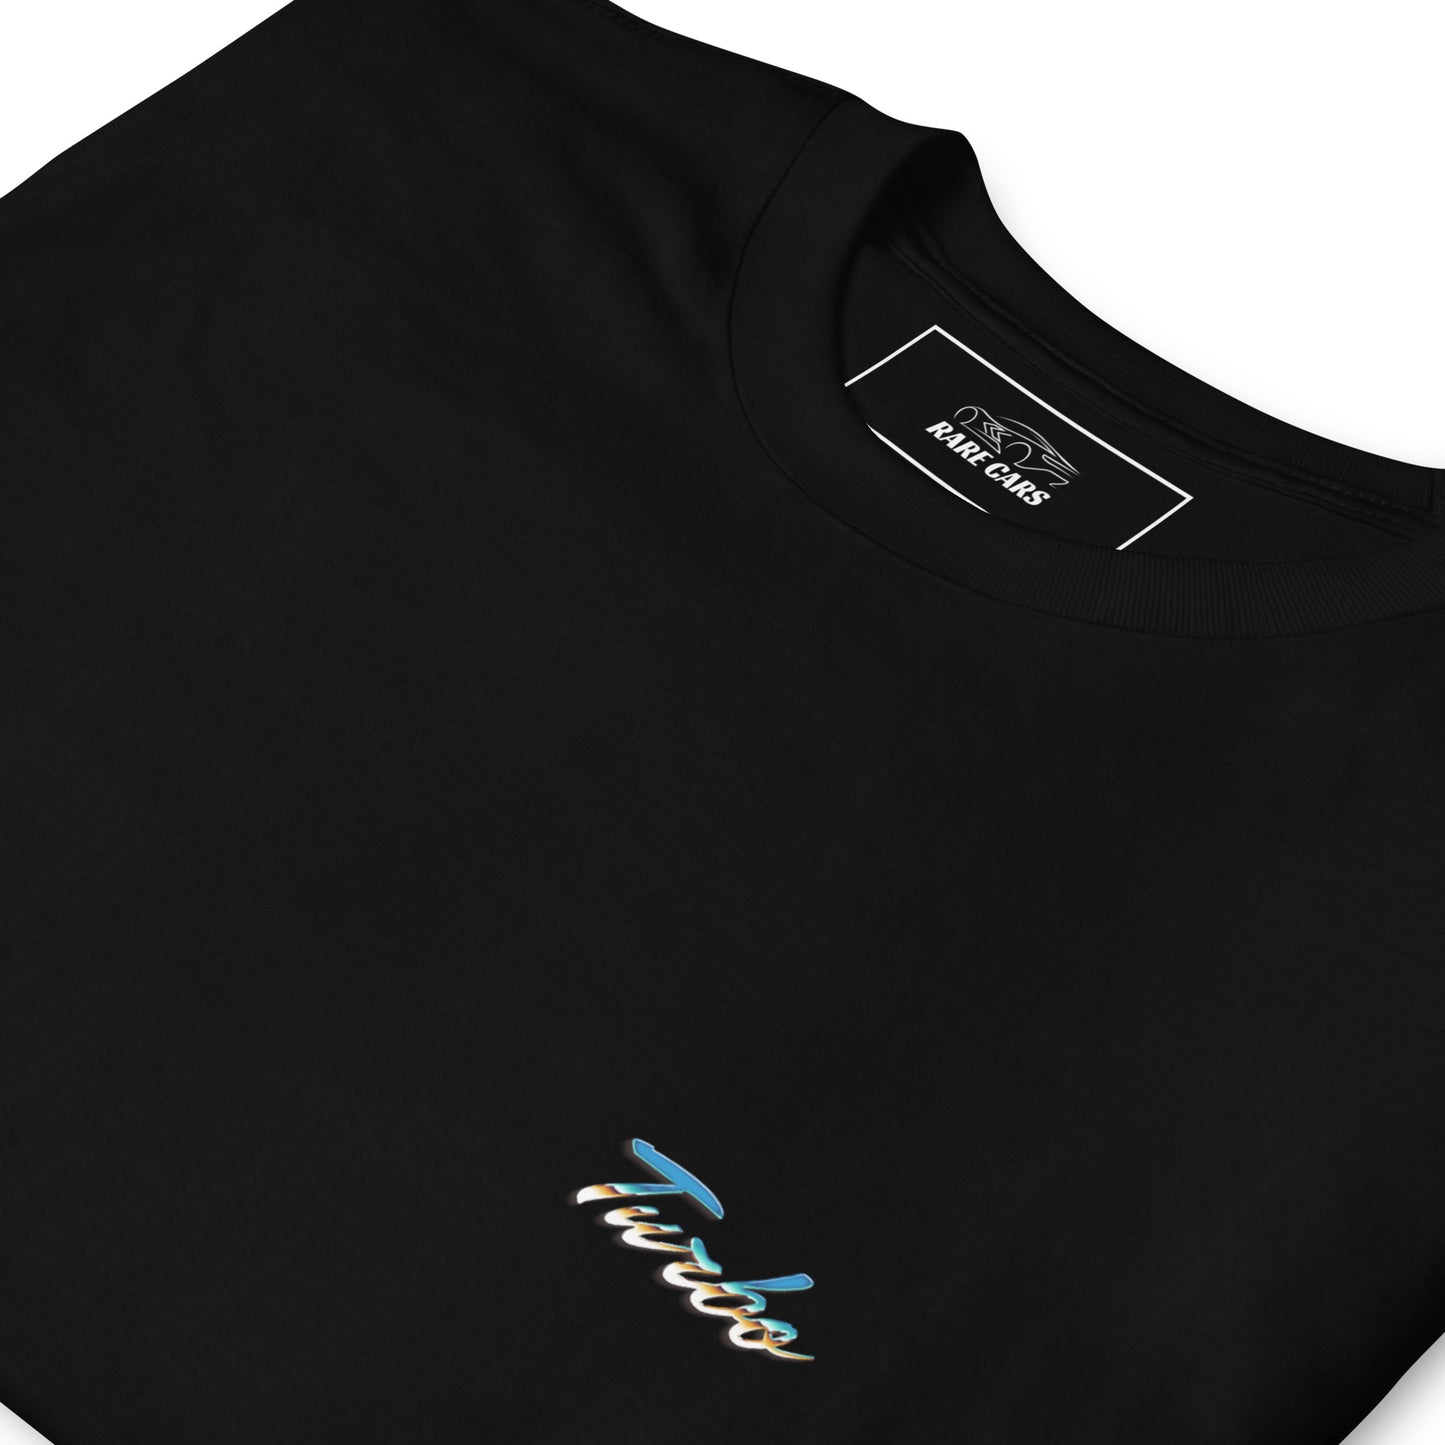 Turbo TA Unisex T-Shirt